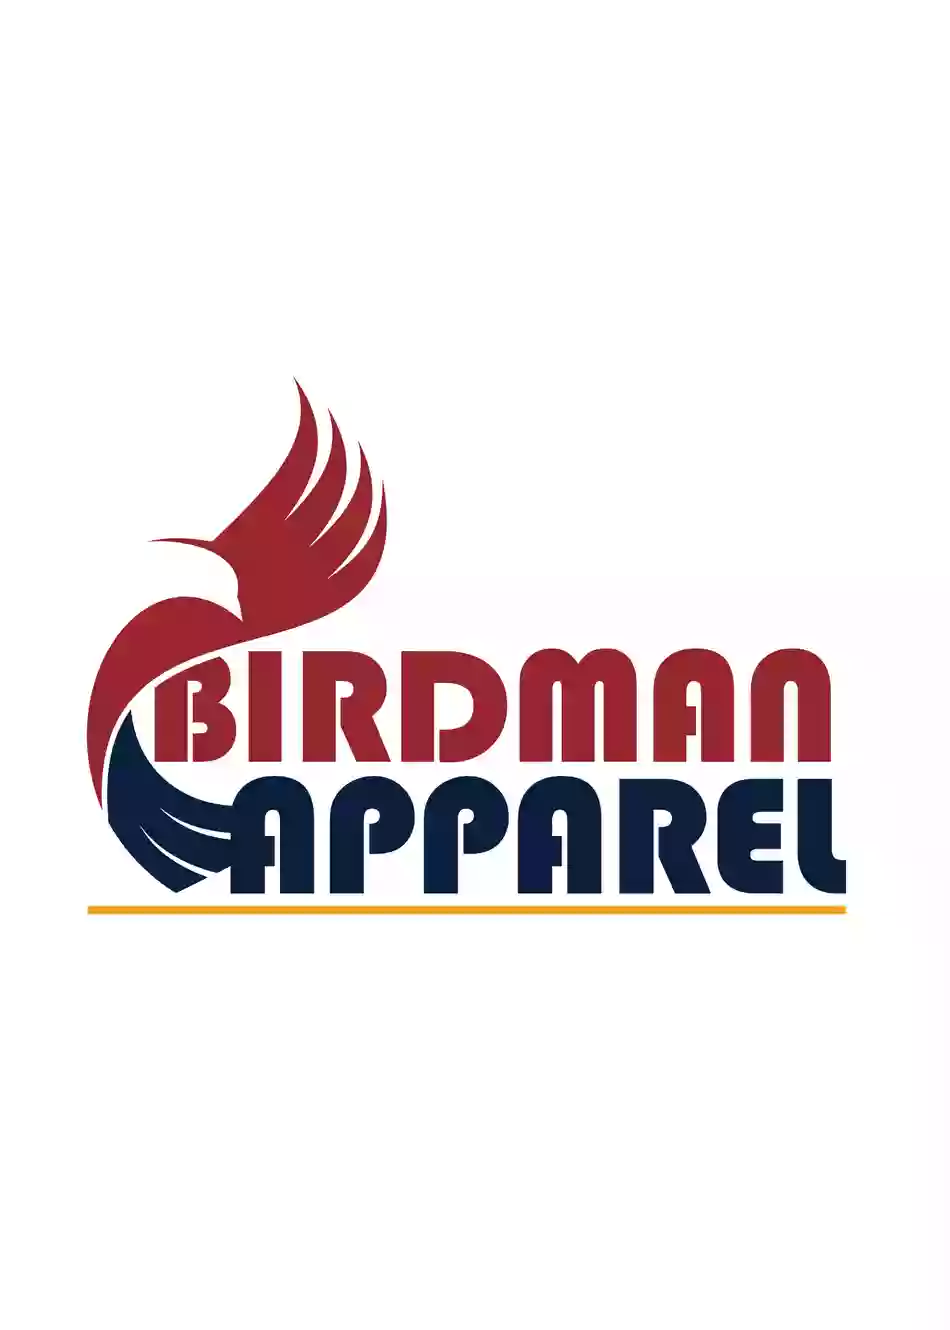 Birdman Apparel